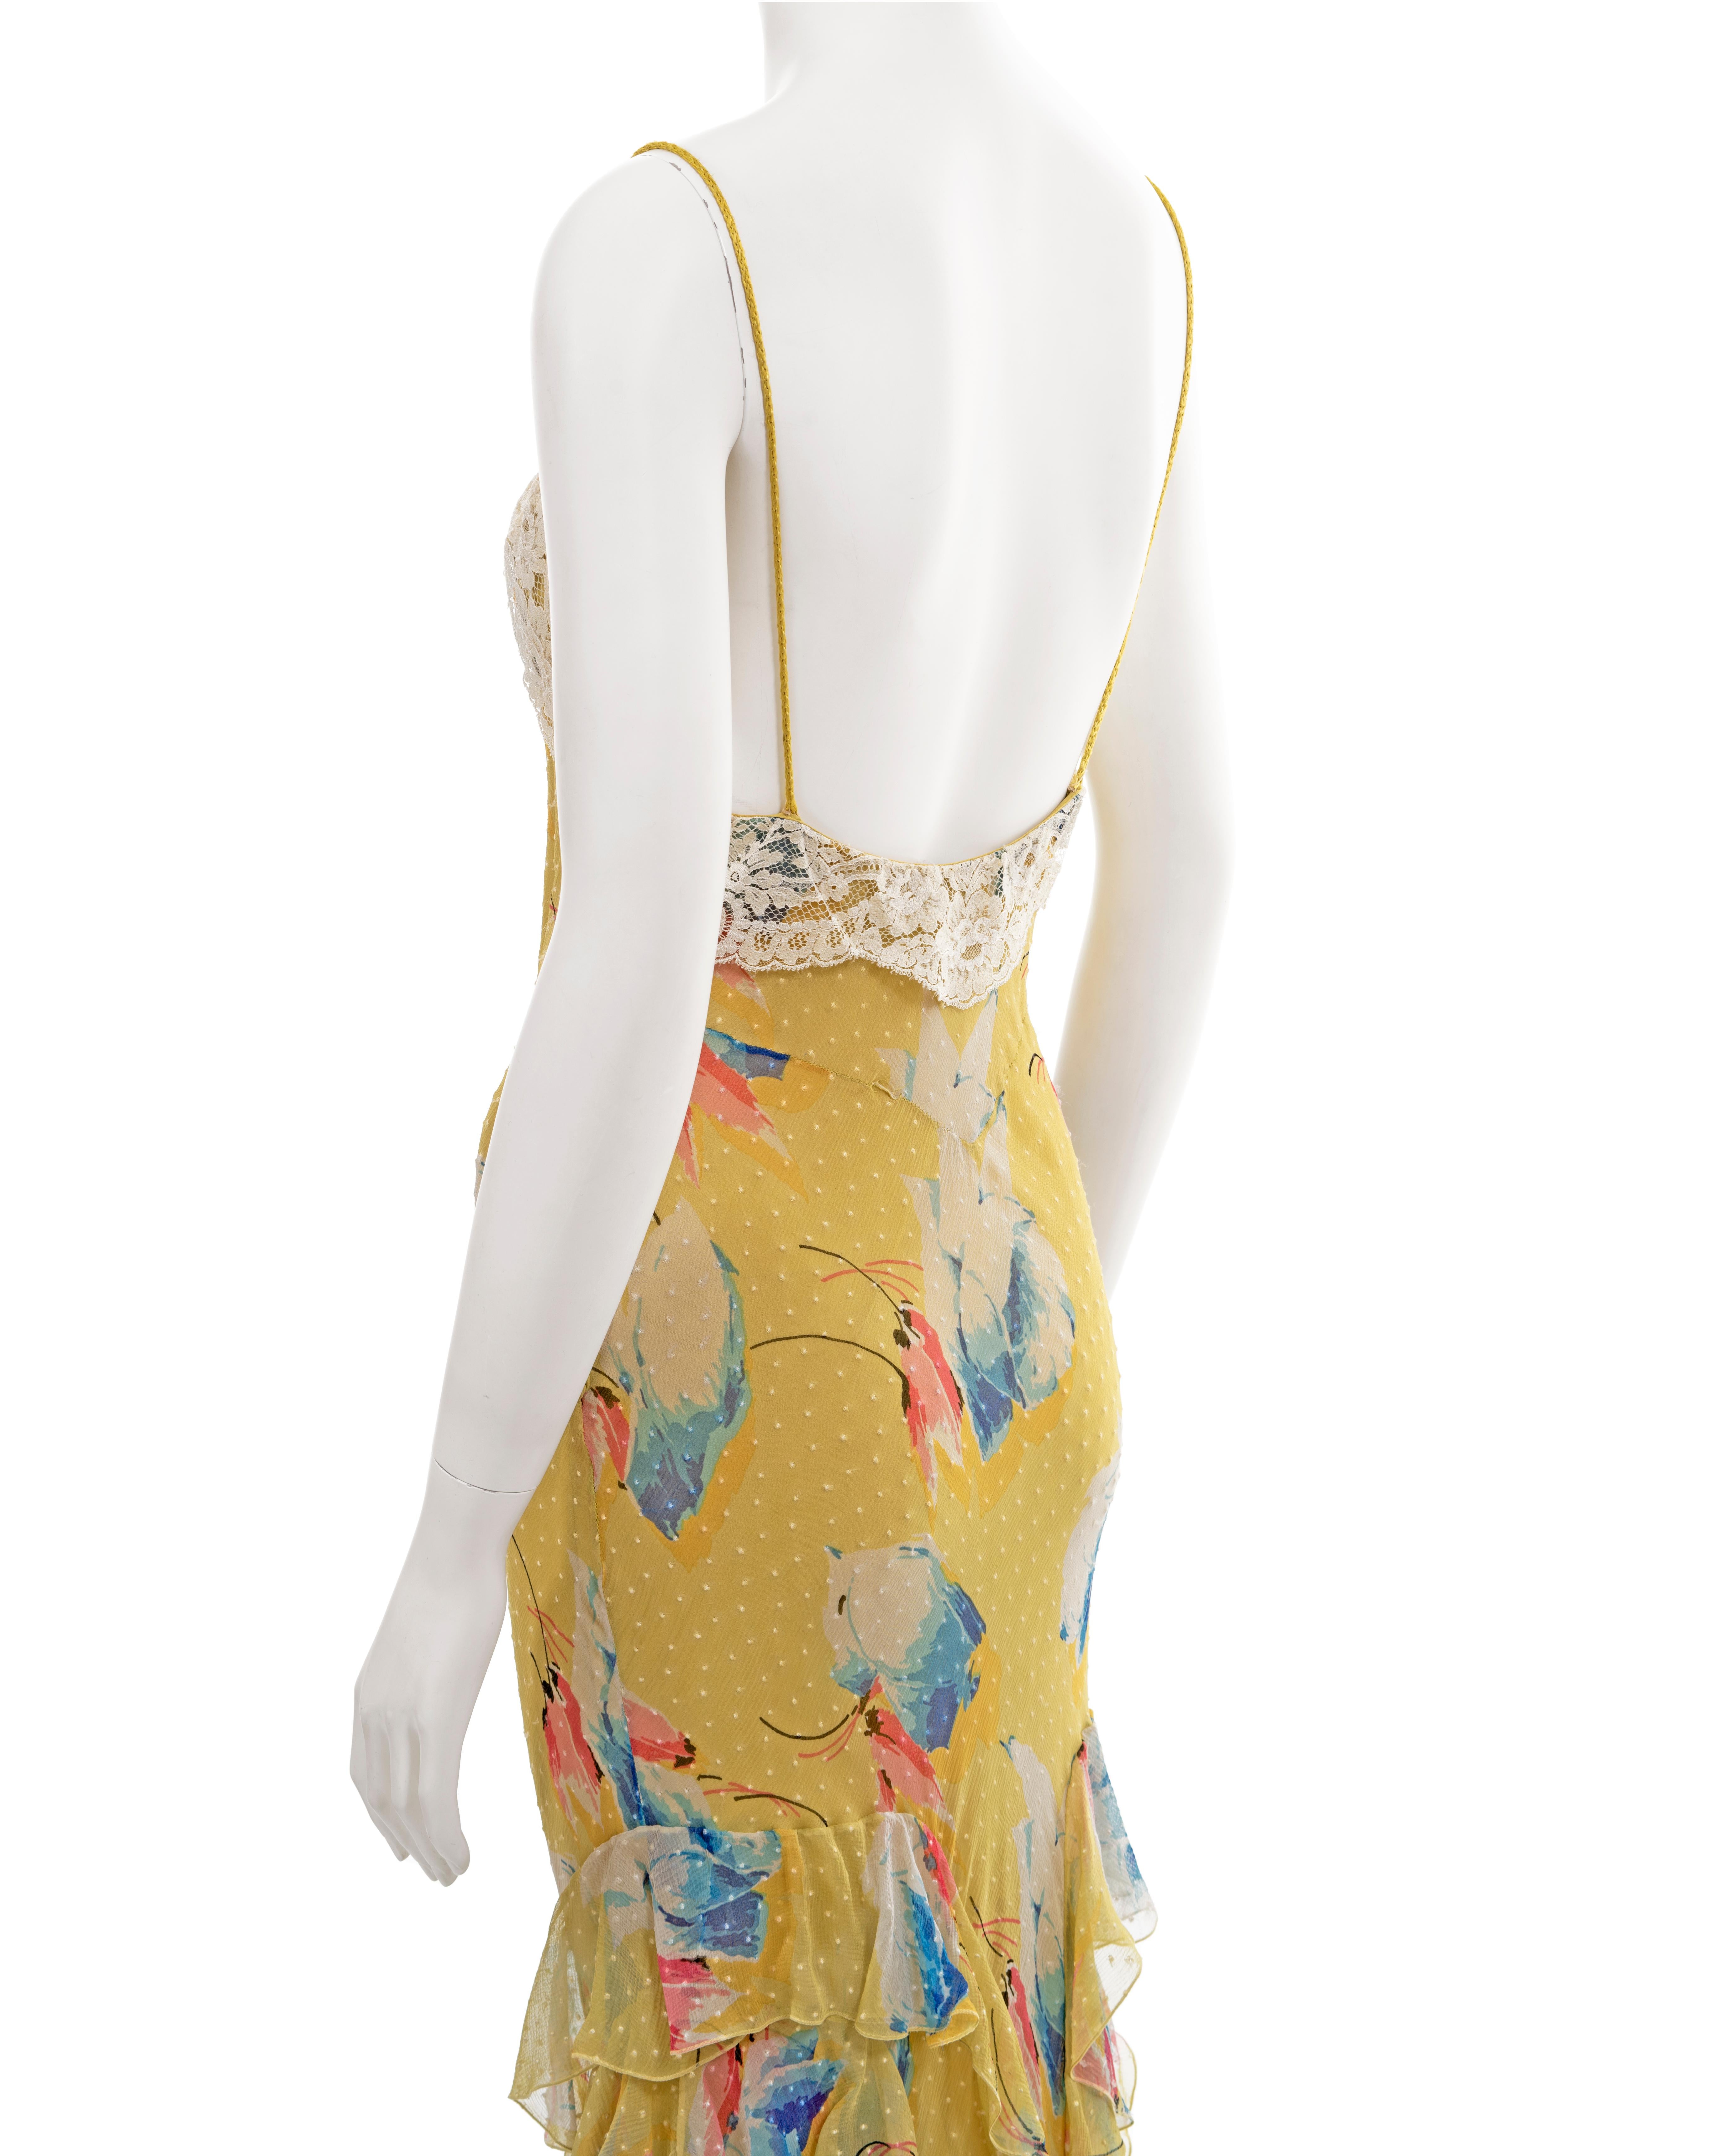 Christian Dior by John Galliano yellow floral silk evening dress, fw 2001 6